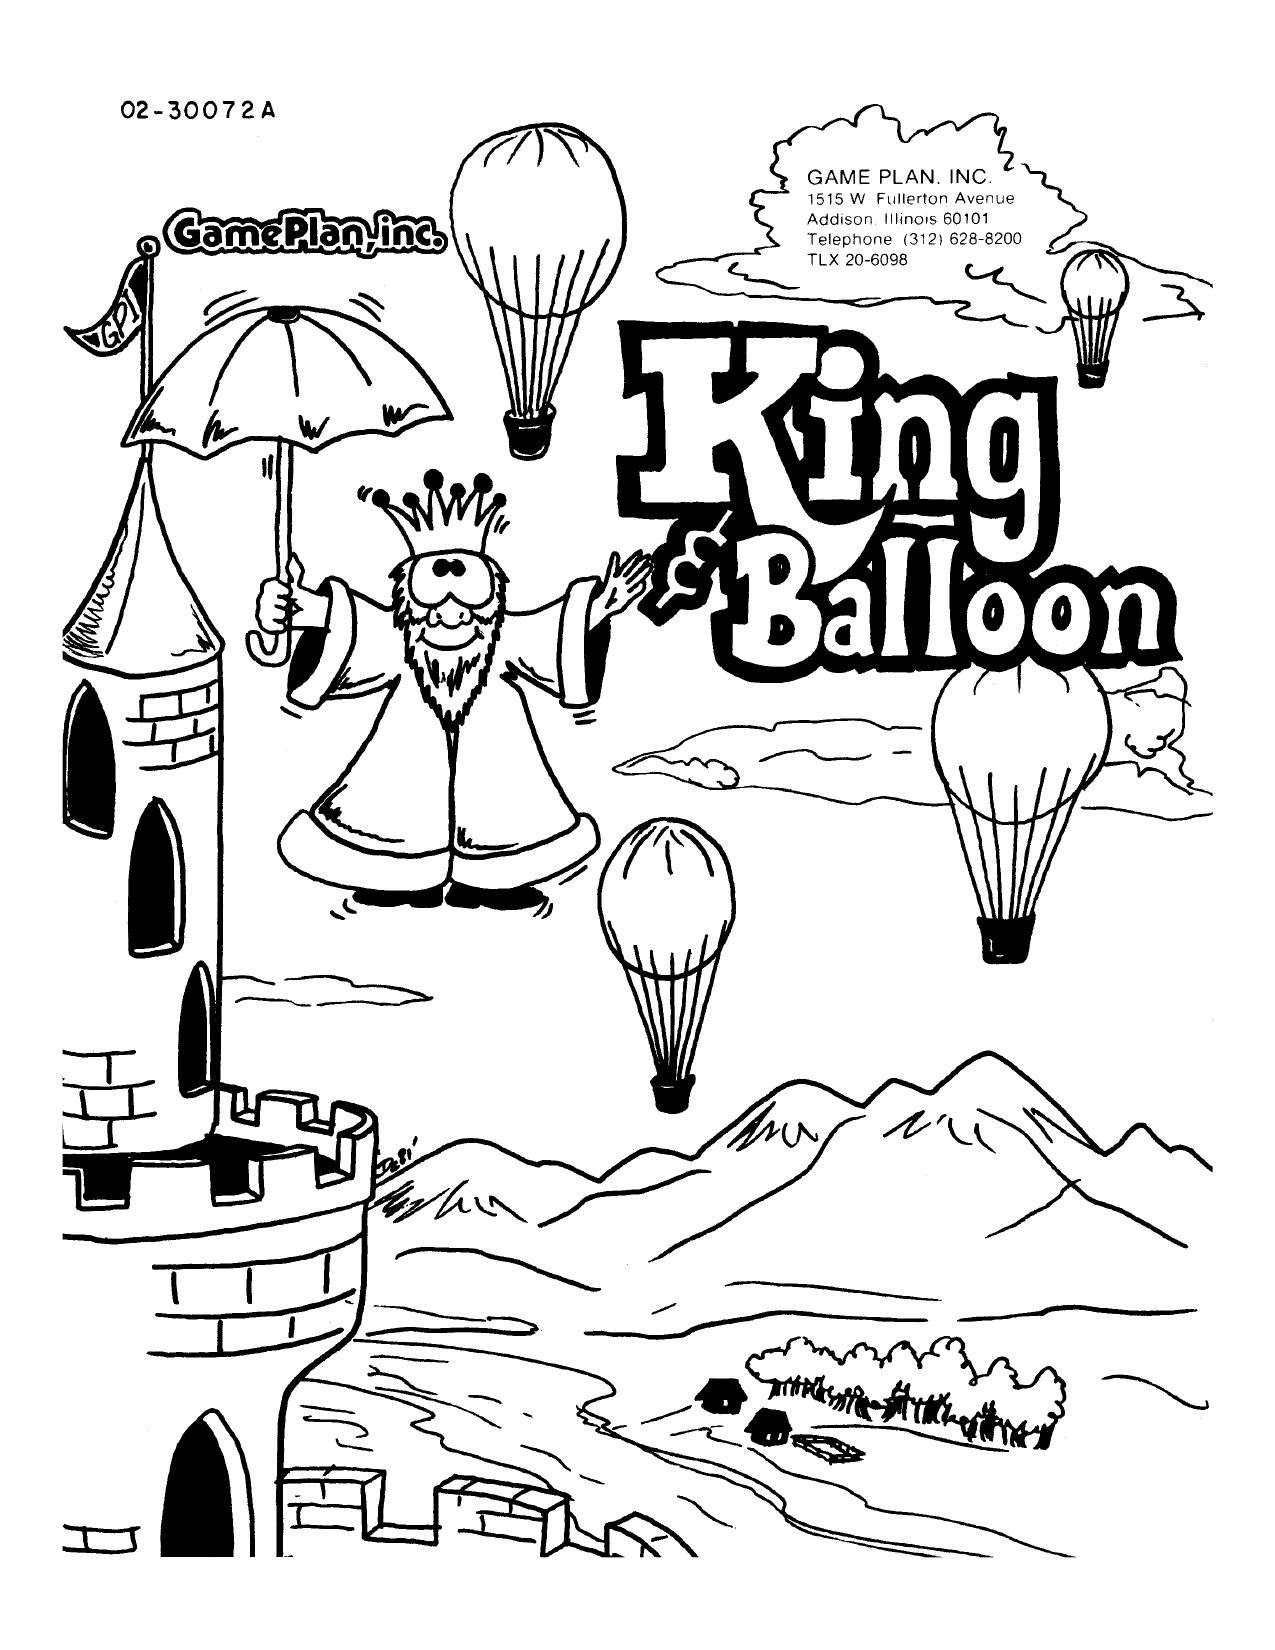 King and Balloon